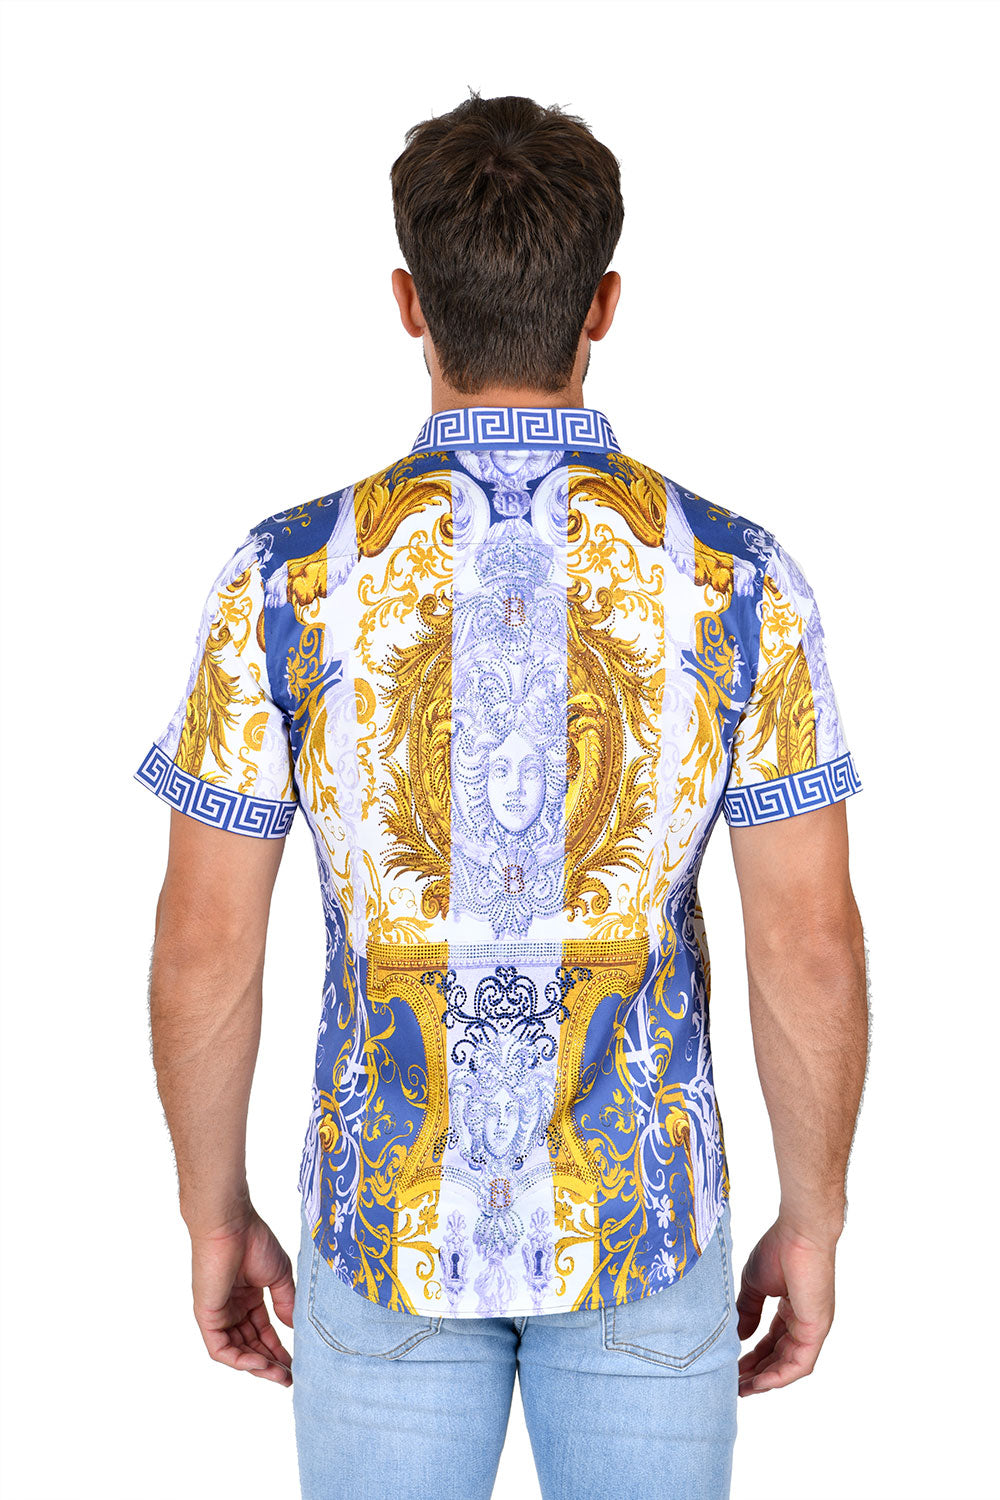 Barabas Men's Greek Pattern Rhinestone Short Sleeve Shirts SSP600 Blue